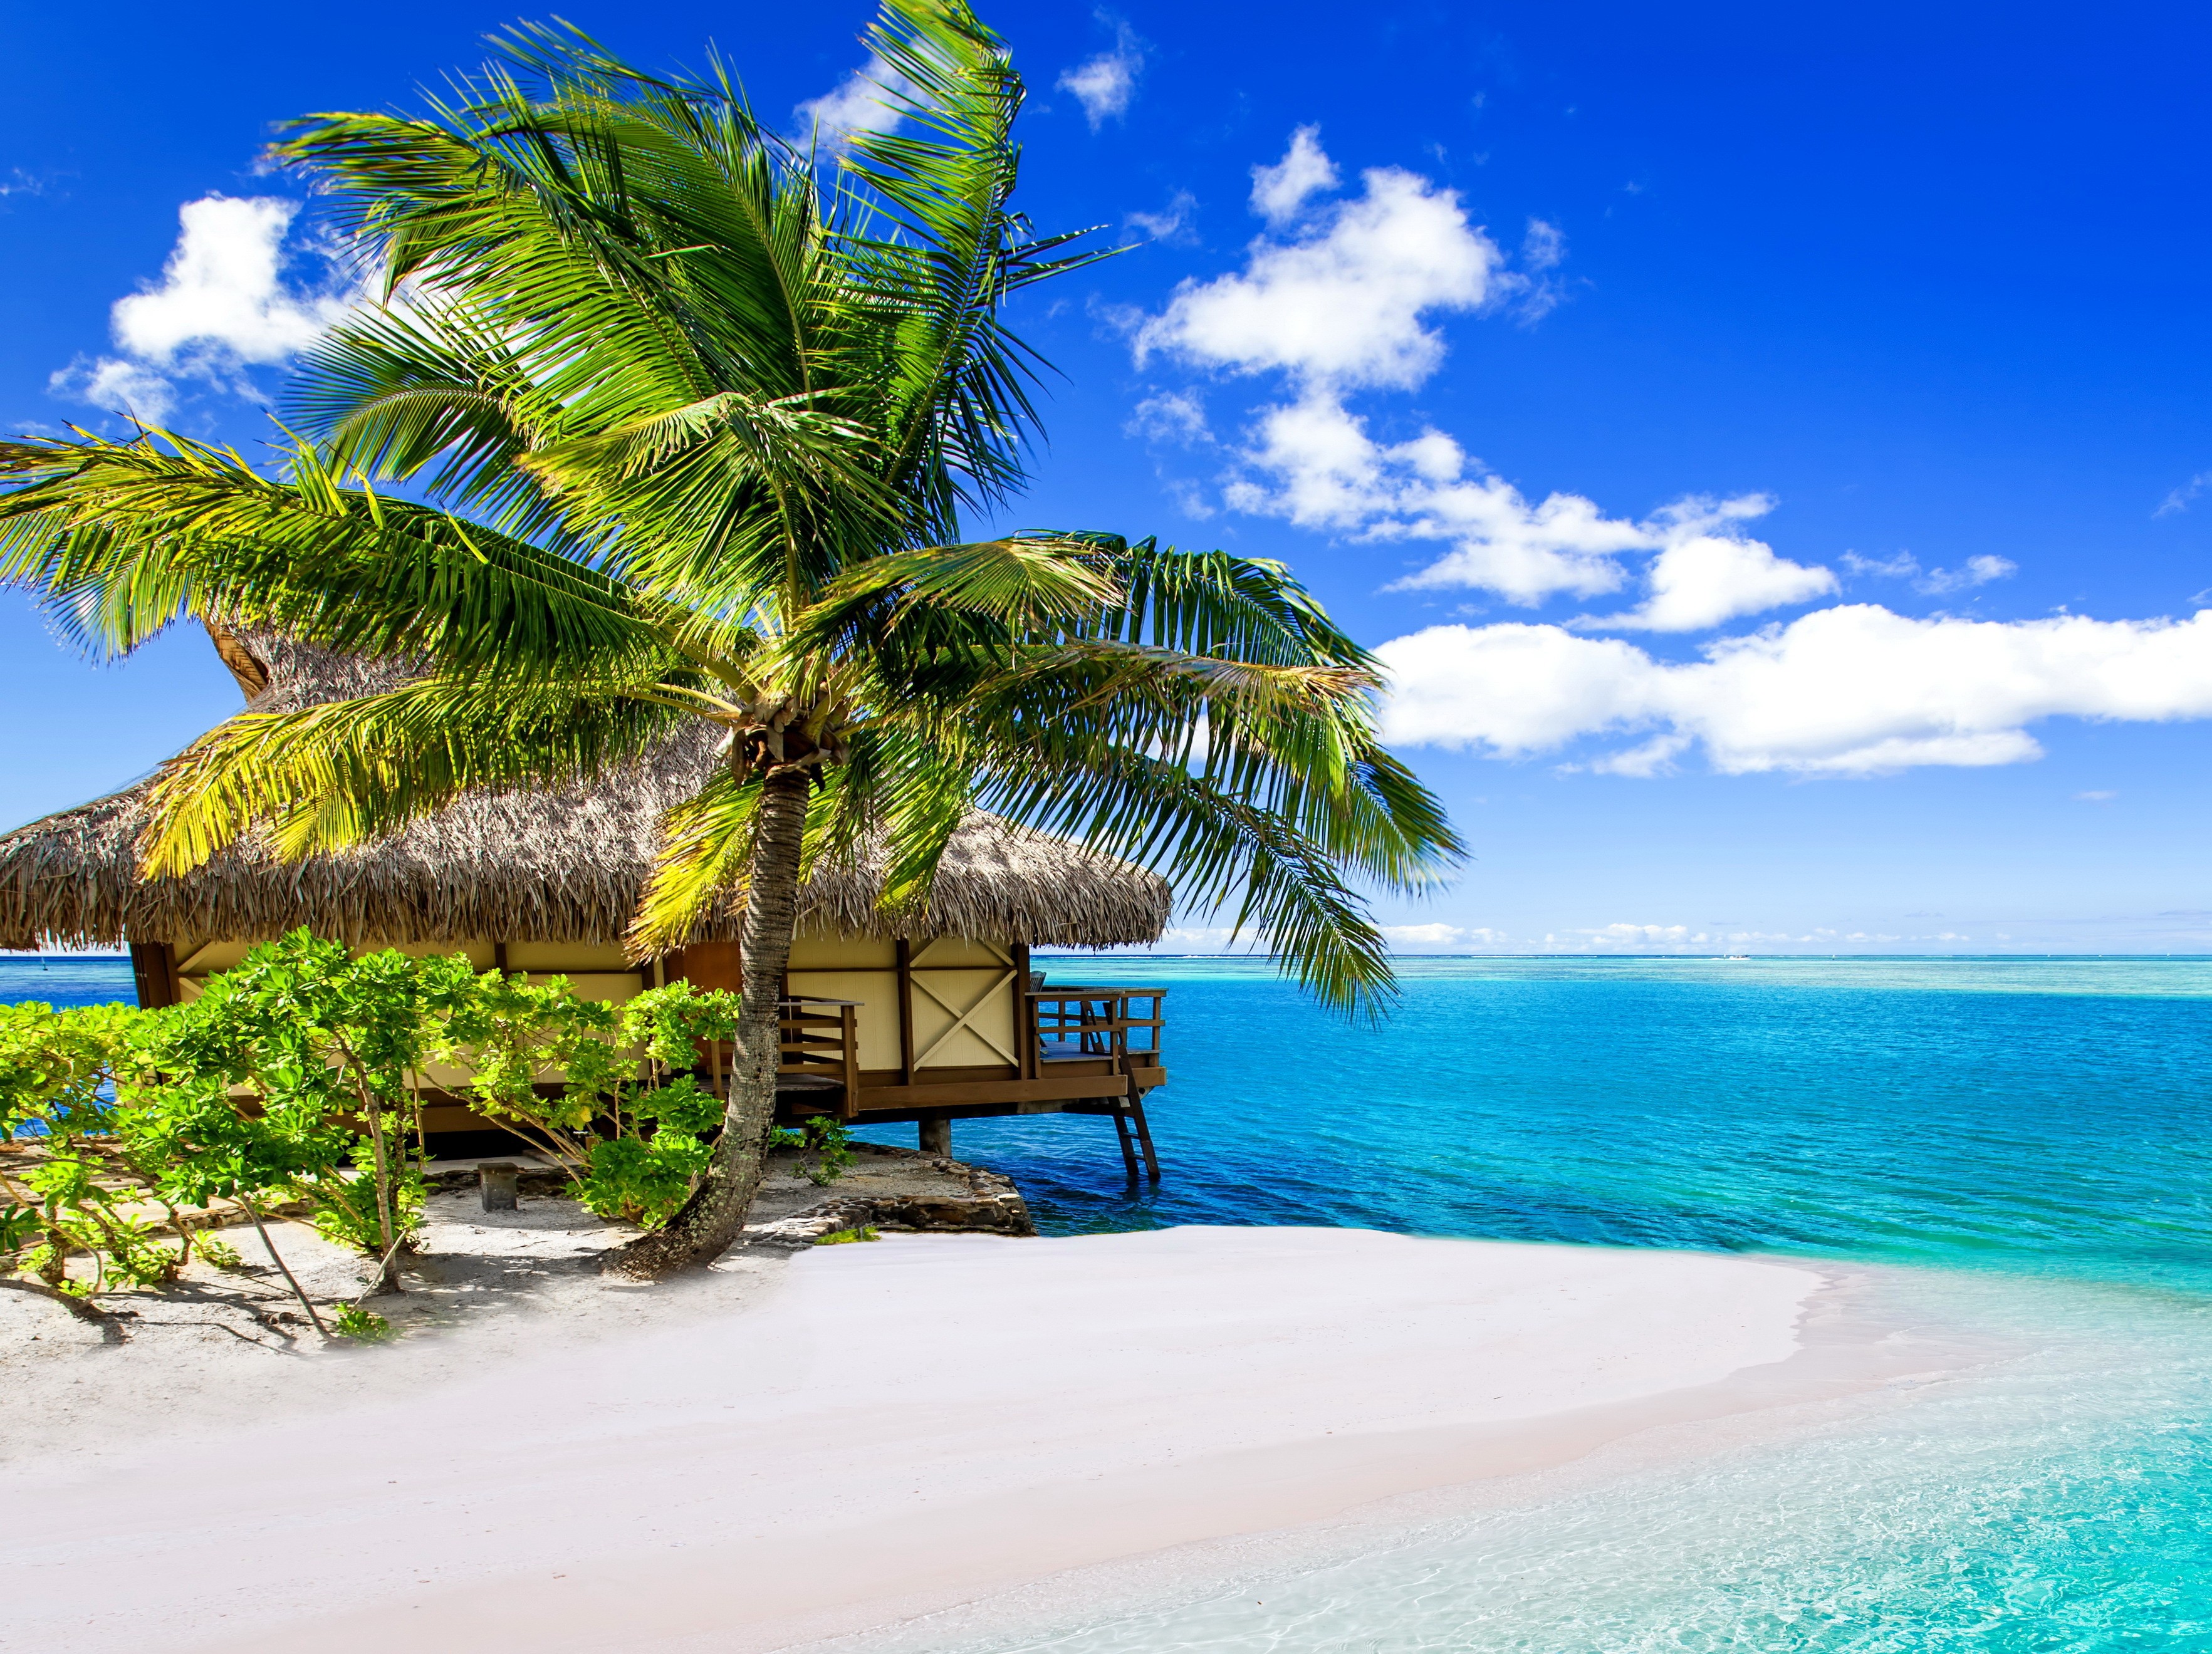 General 3530x2640 palm trees sea island bungalow beach landscape vibrant tropical horizon water sky clouds sand